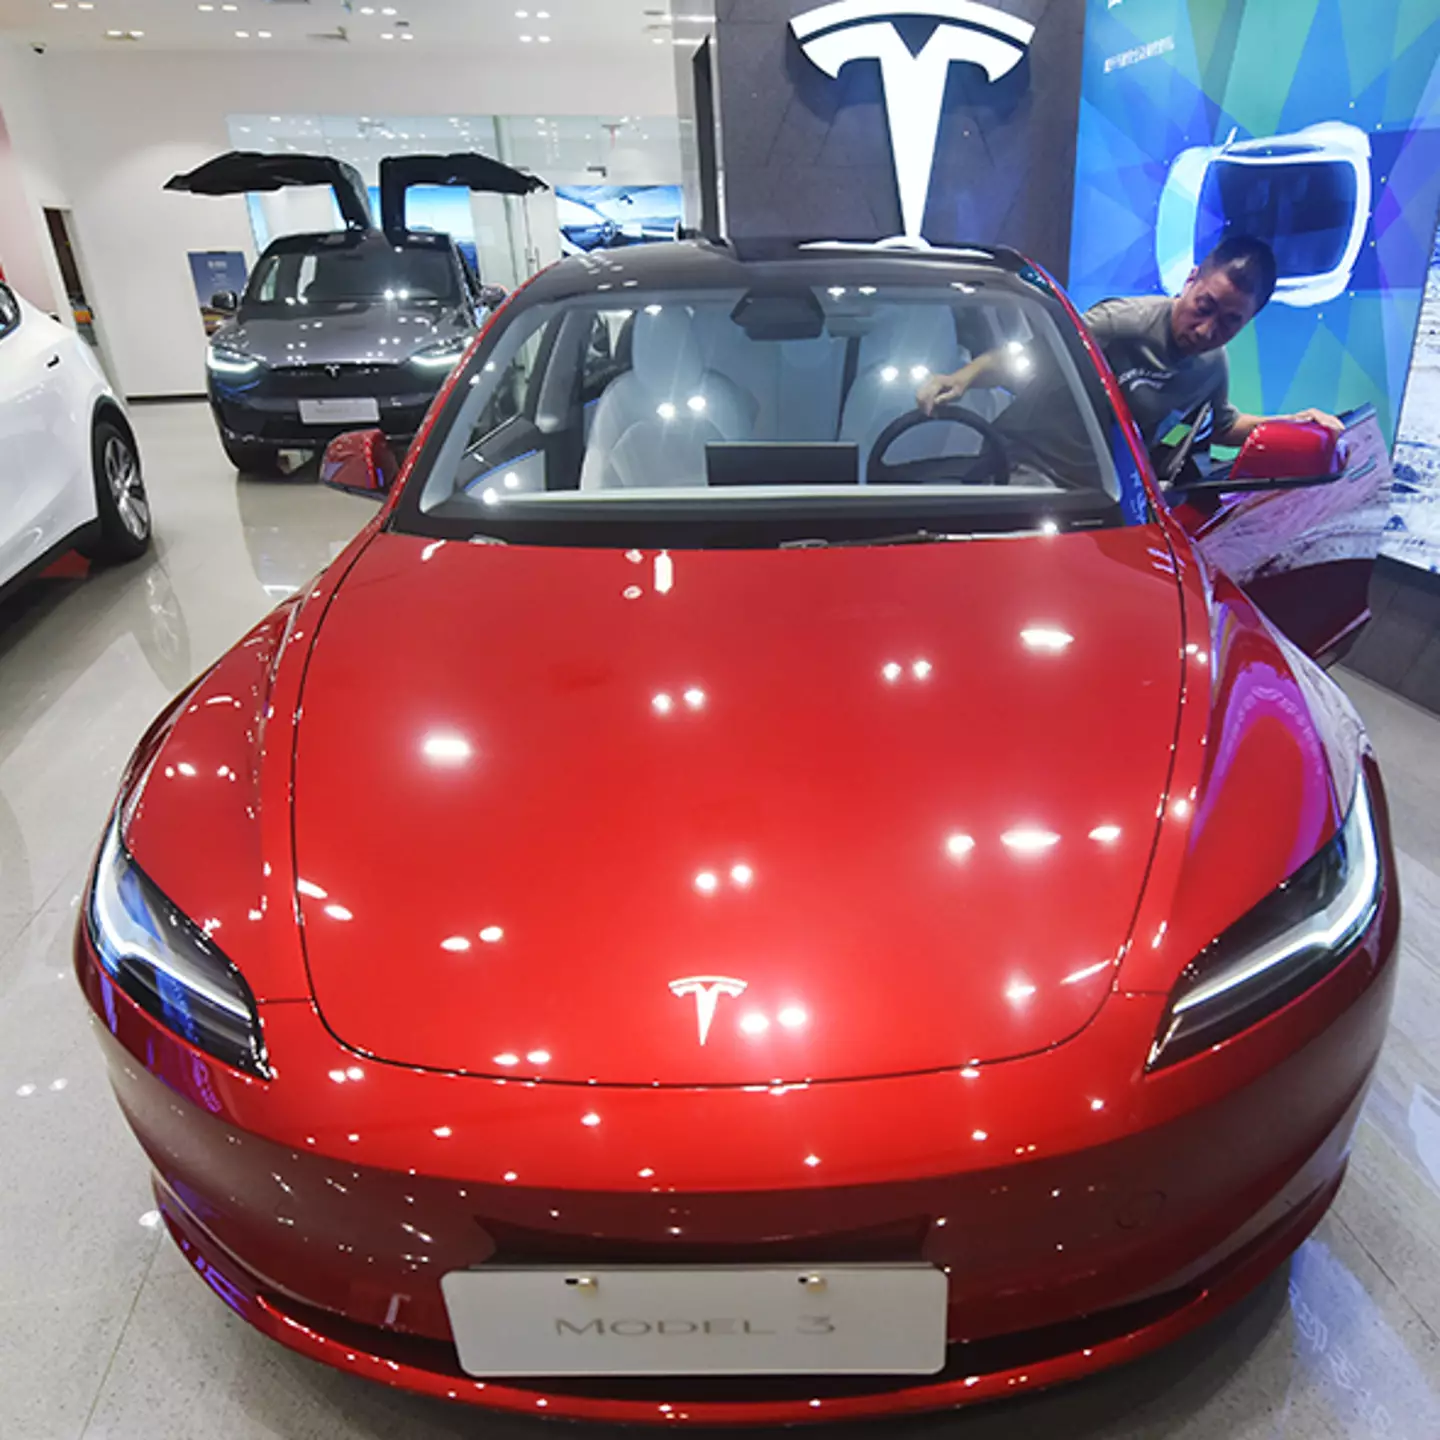 Chinese vehicle manufacturer overtakes Tesla as leading EV maker